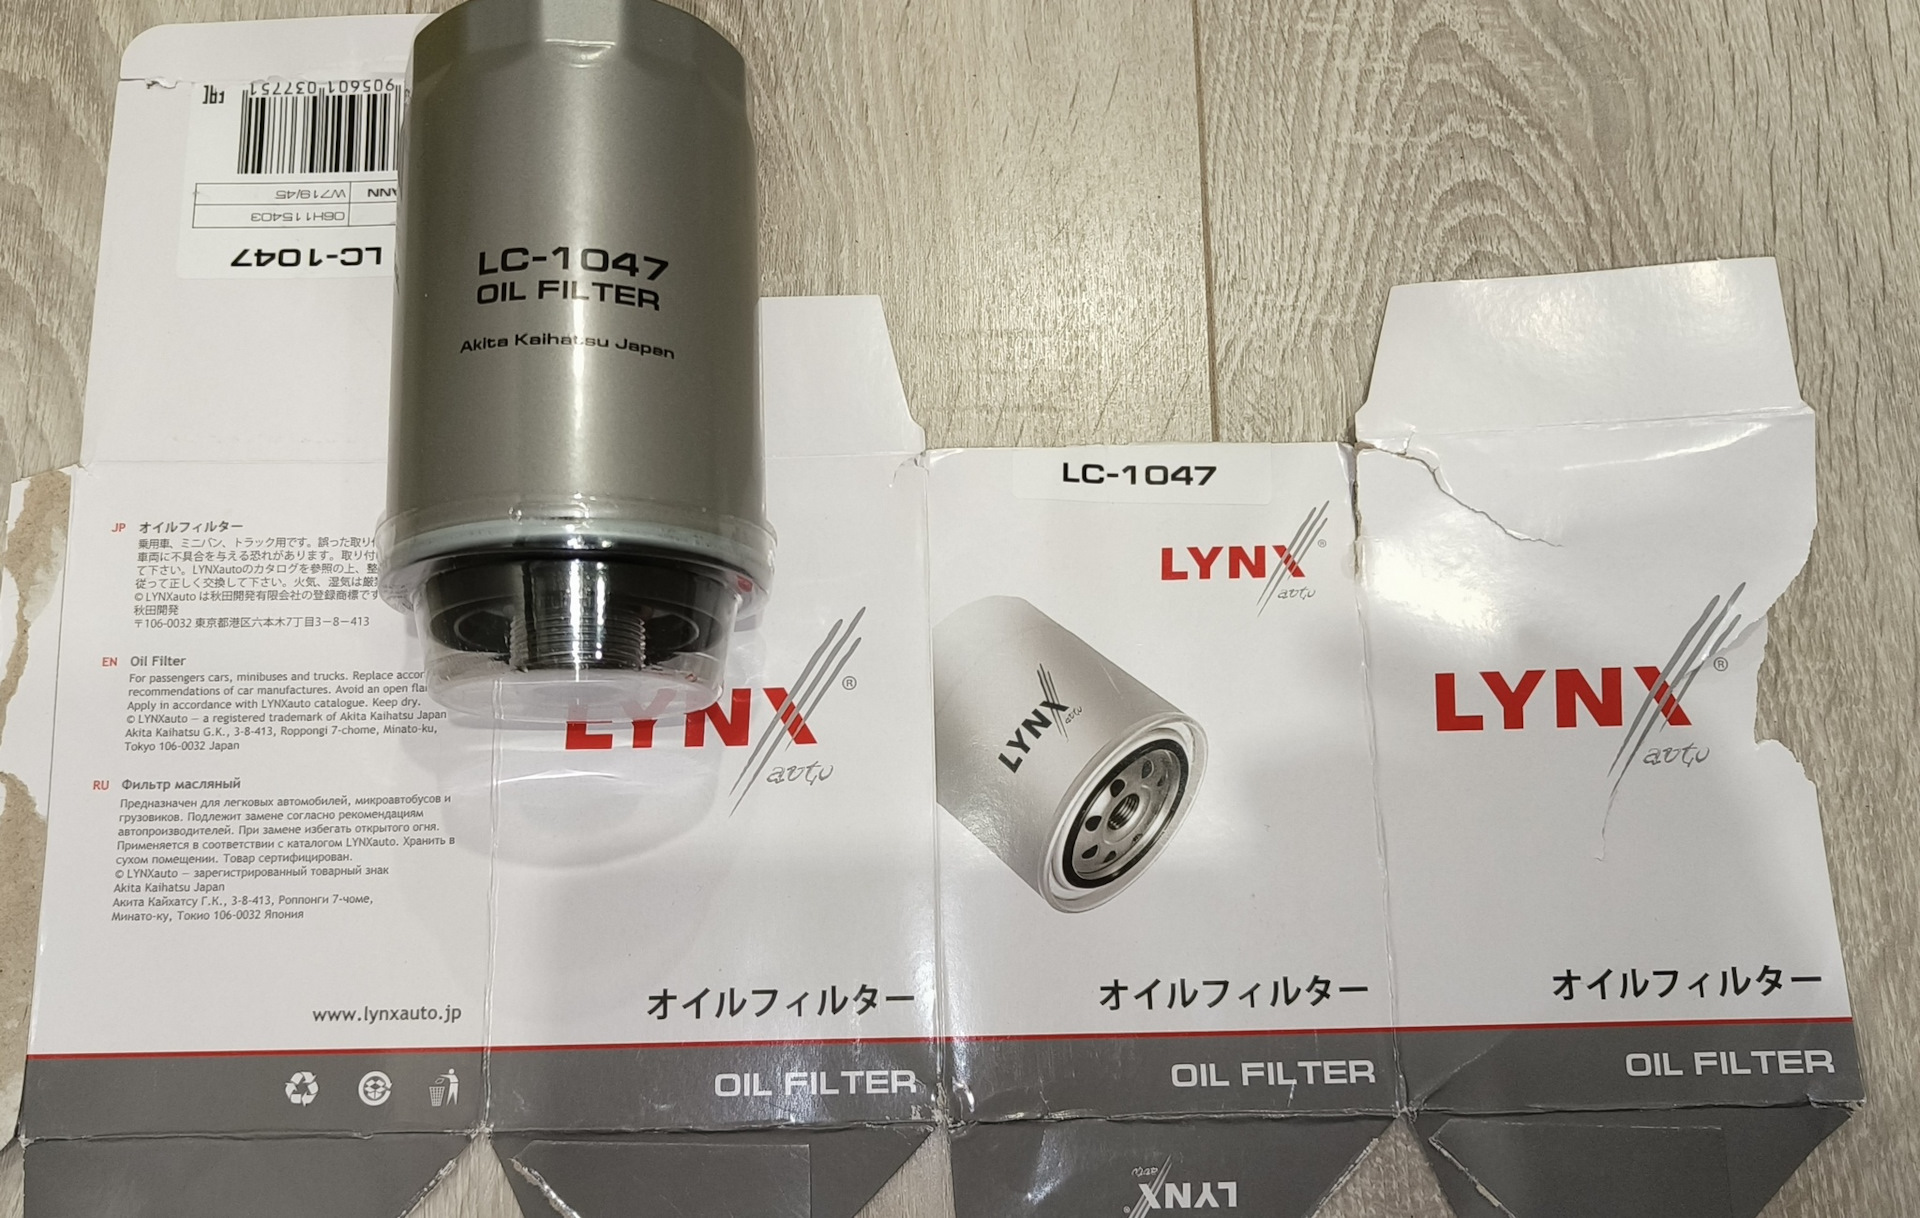 Lc1047 фильтр масляный. Lynx lc1047. LYNXAUTO lc1047. Распил масляного фильтра Lynx LC-1502. Производитель lynx отзывы